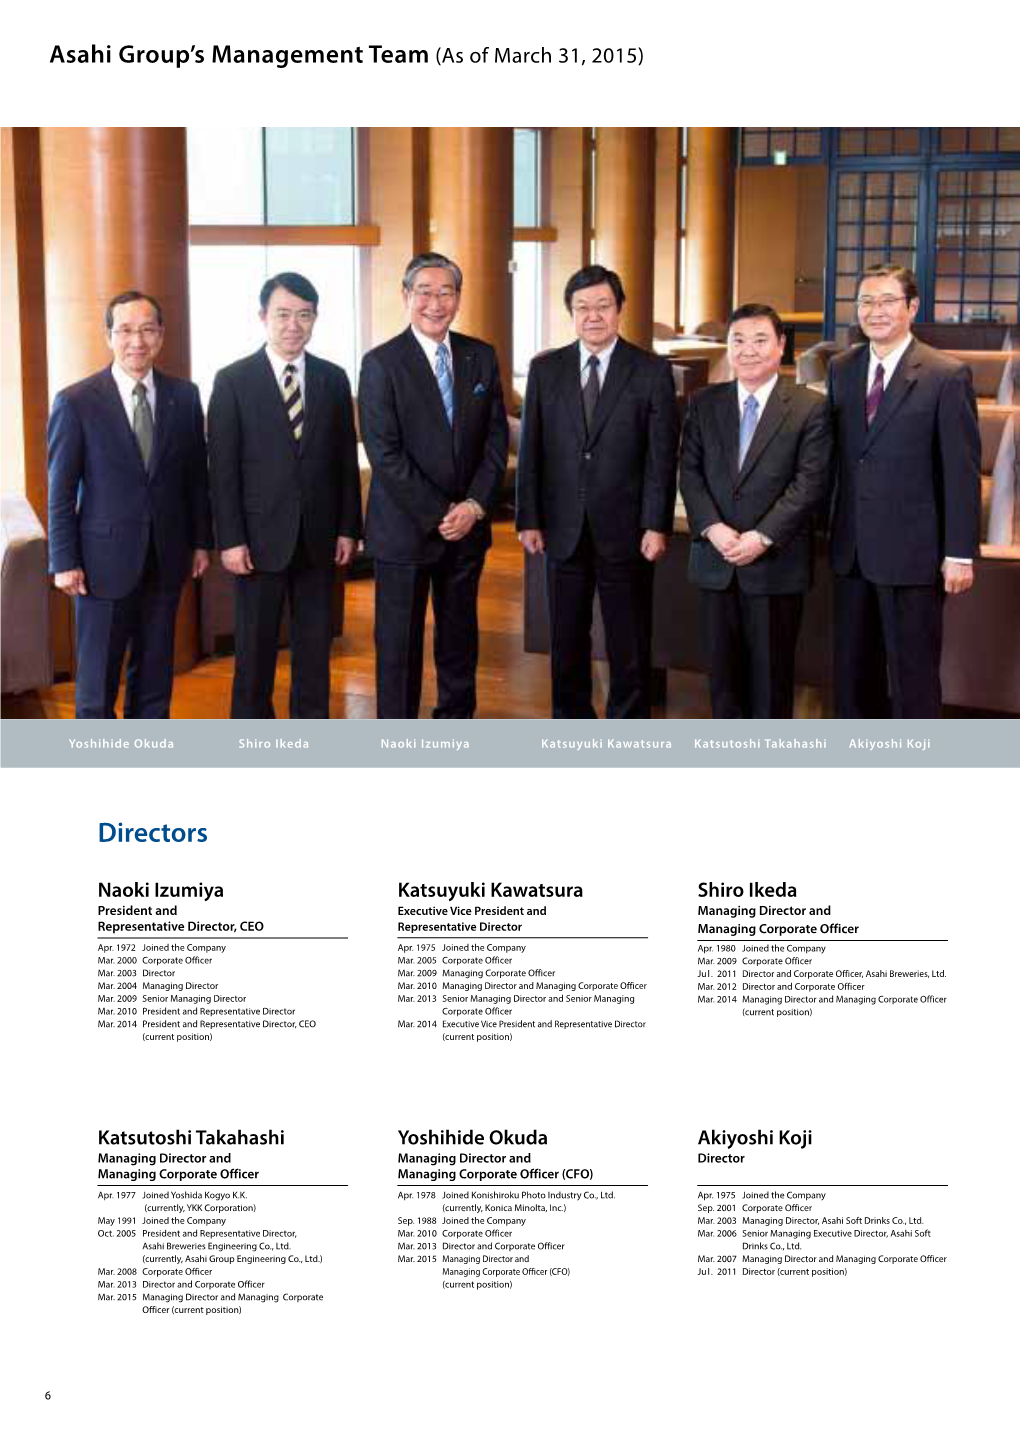 Directors Asahi Group's Management Team